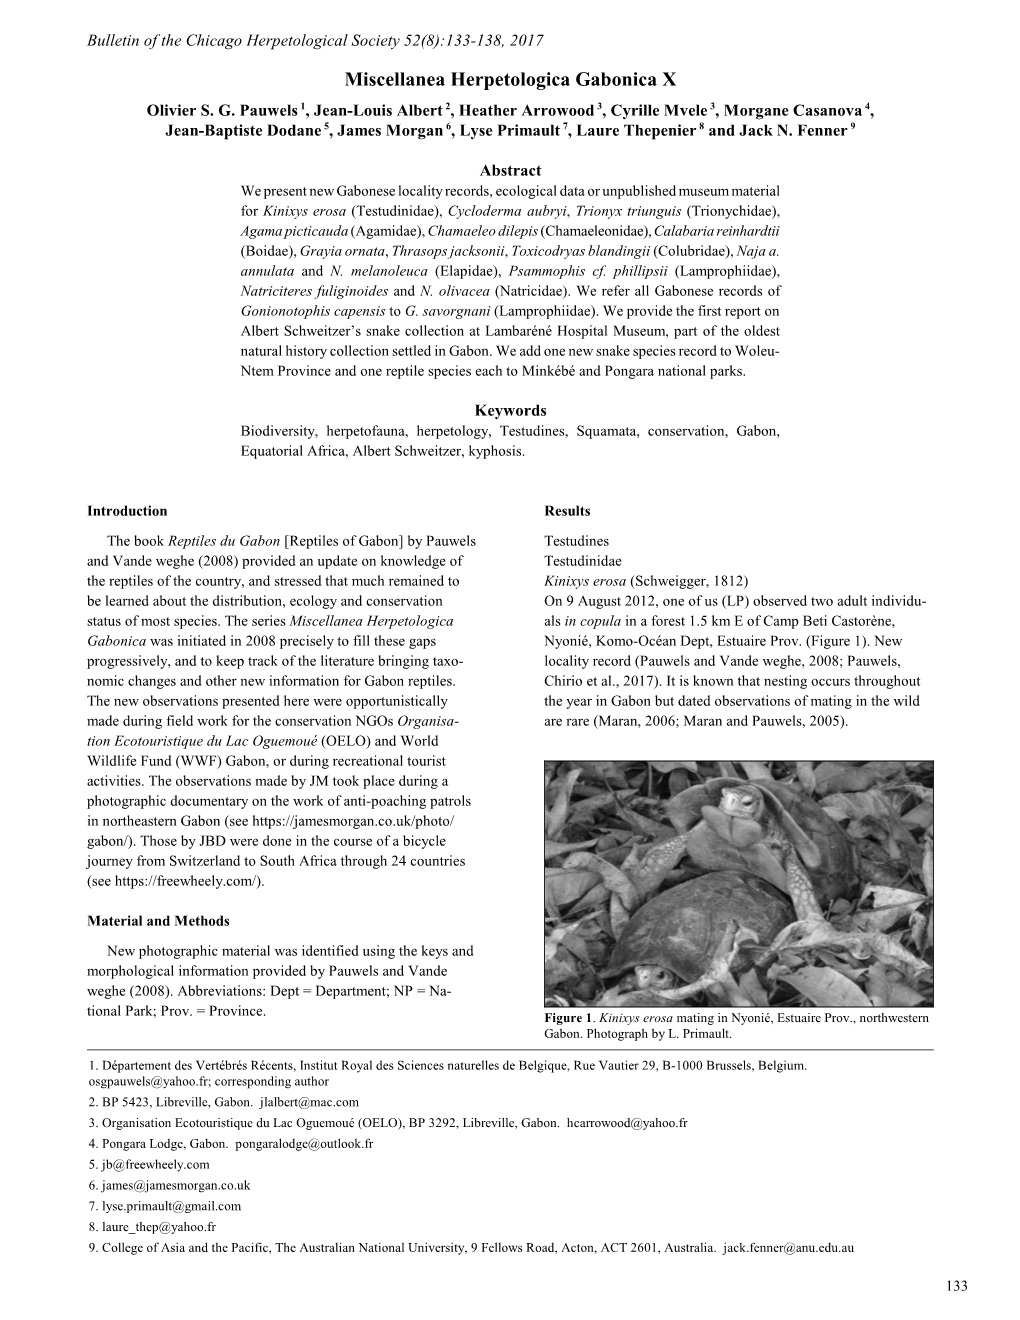 Miscellanea Herpetologica Gabonica X. Bulletin of the Chicago